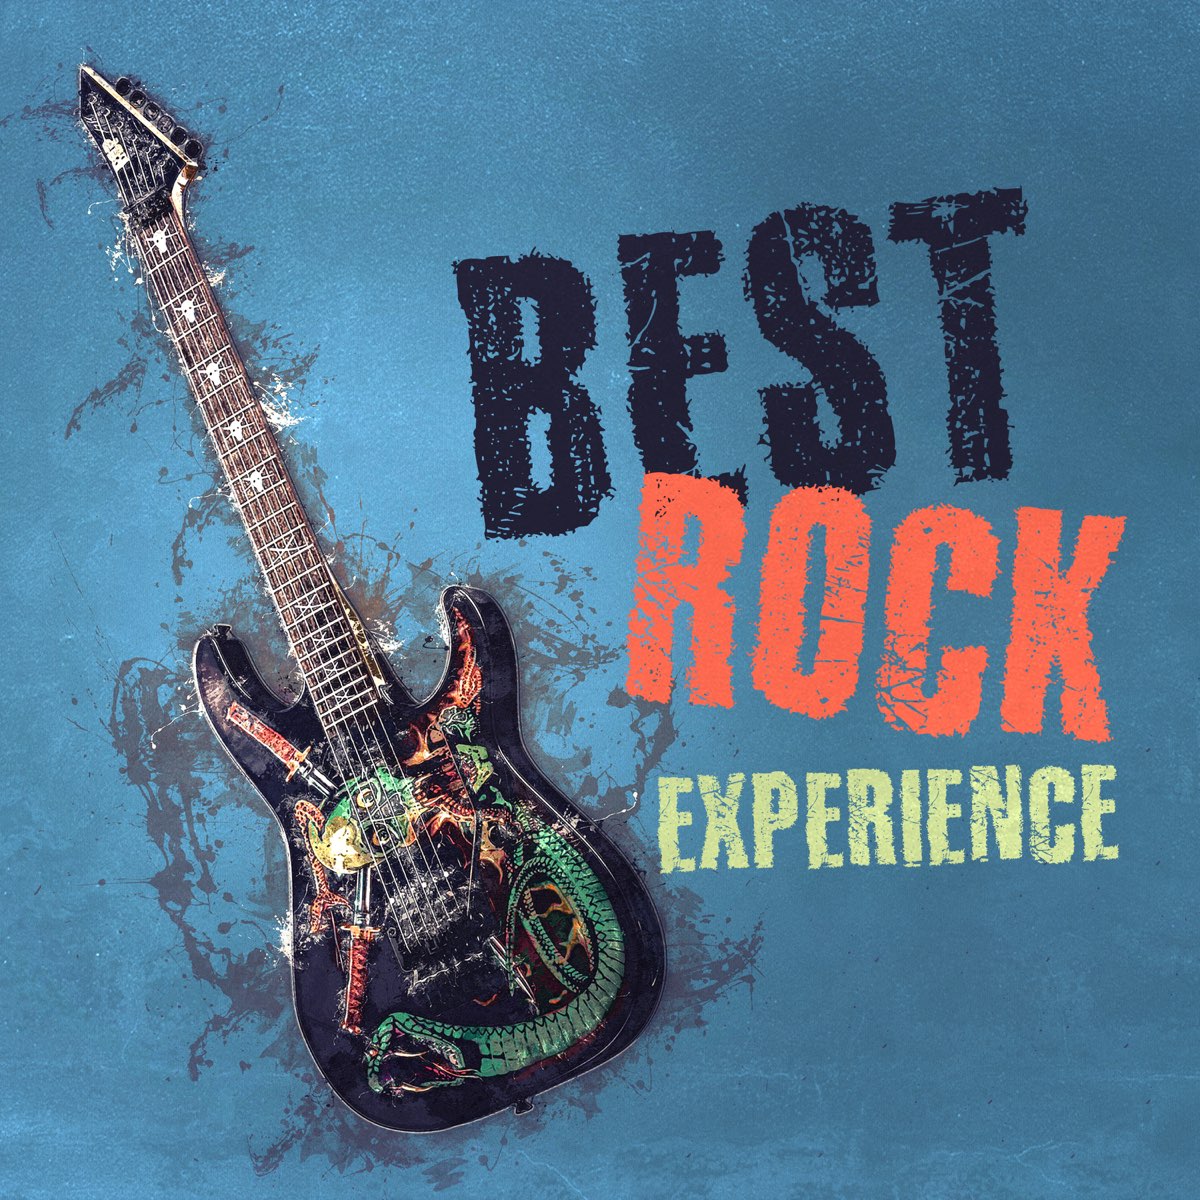 Best Rock. Блюз-рок рифф. Better рок. Фото the best Rock. Альтернативный рок лучшее